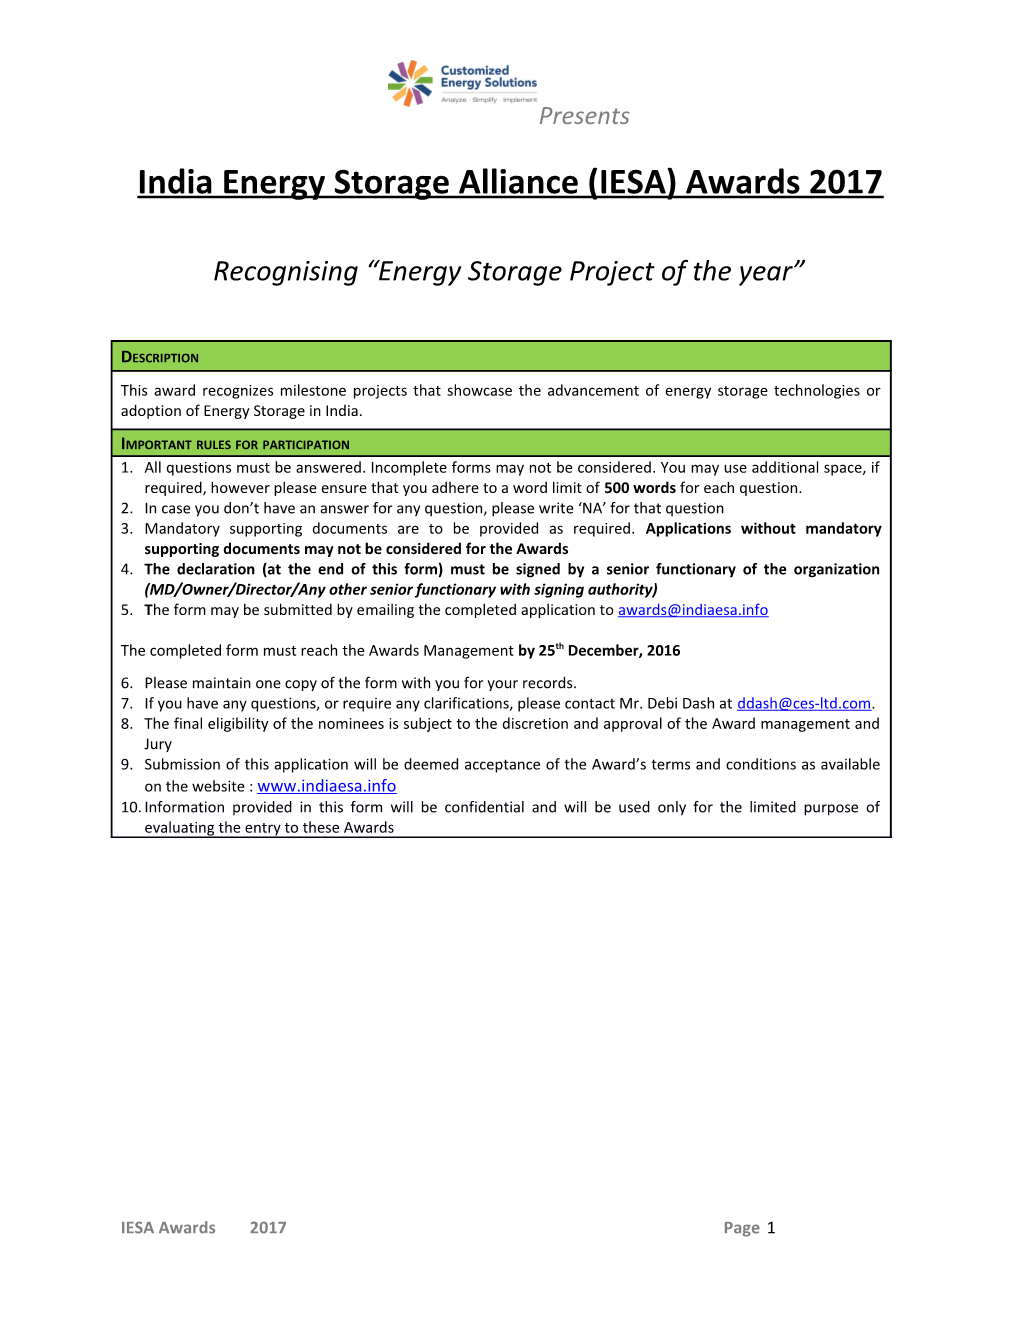 India Energy Storage Alliance (IESA) Awards 2017